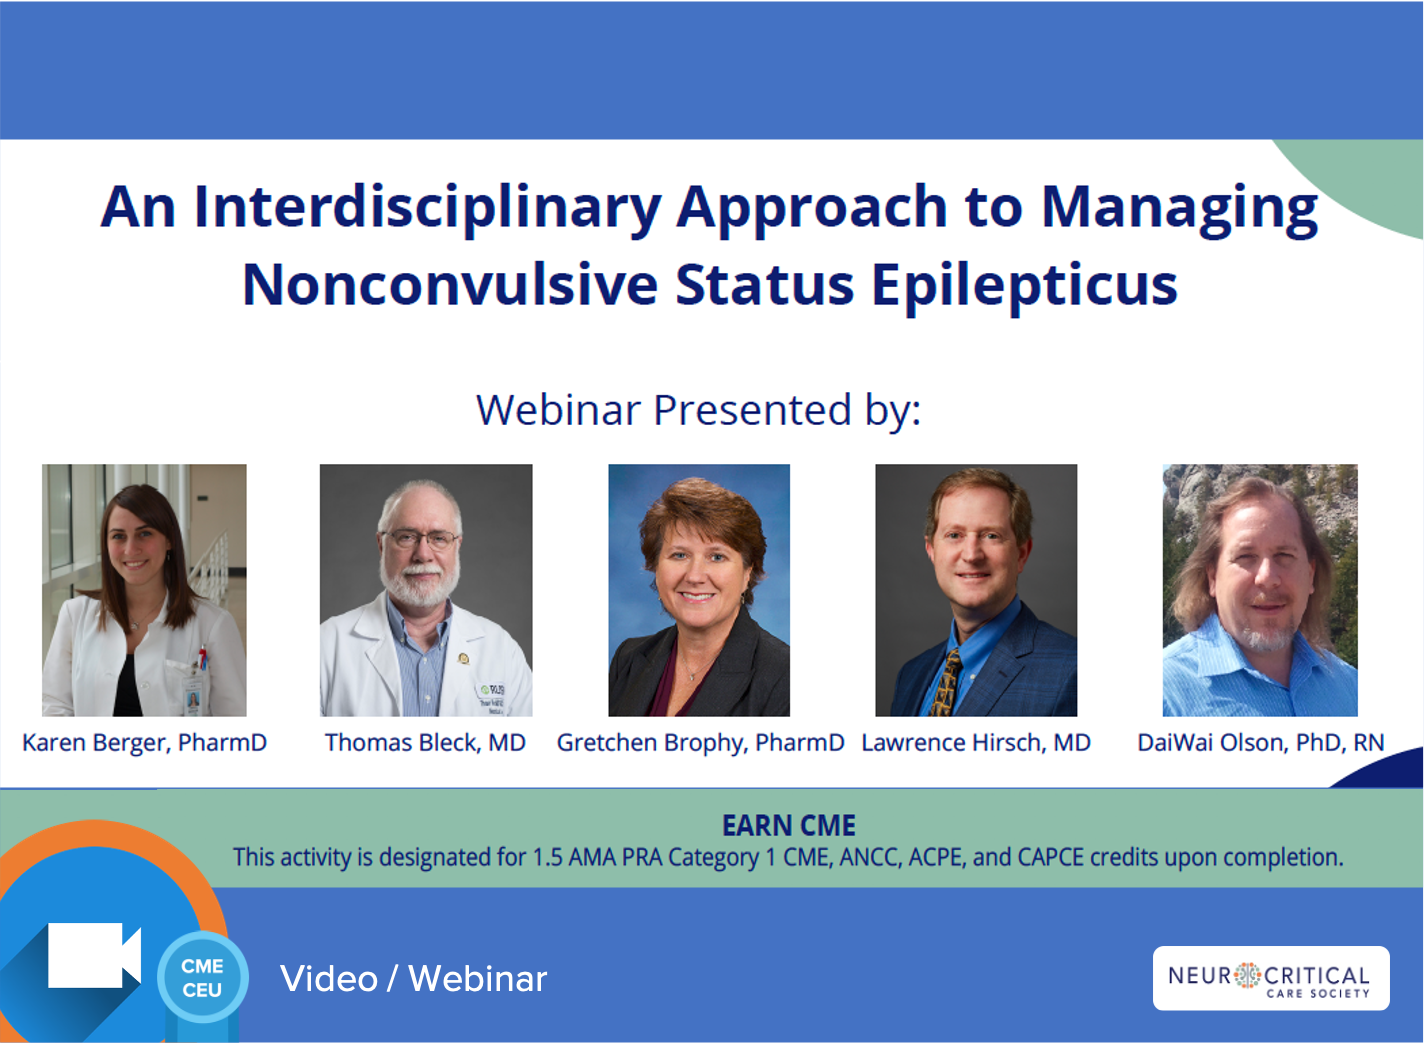 An Interdisciplinary Approach to Managing Nonconvulsive Status Epilepticus